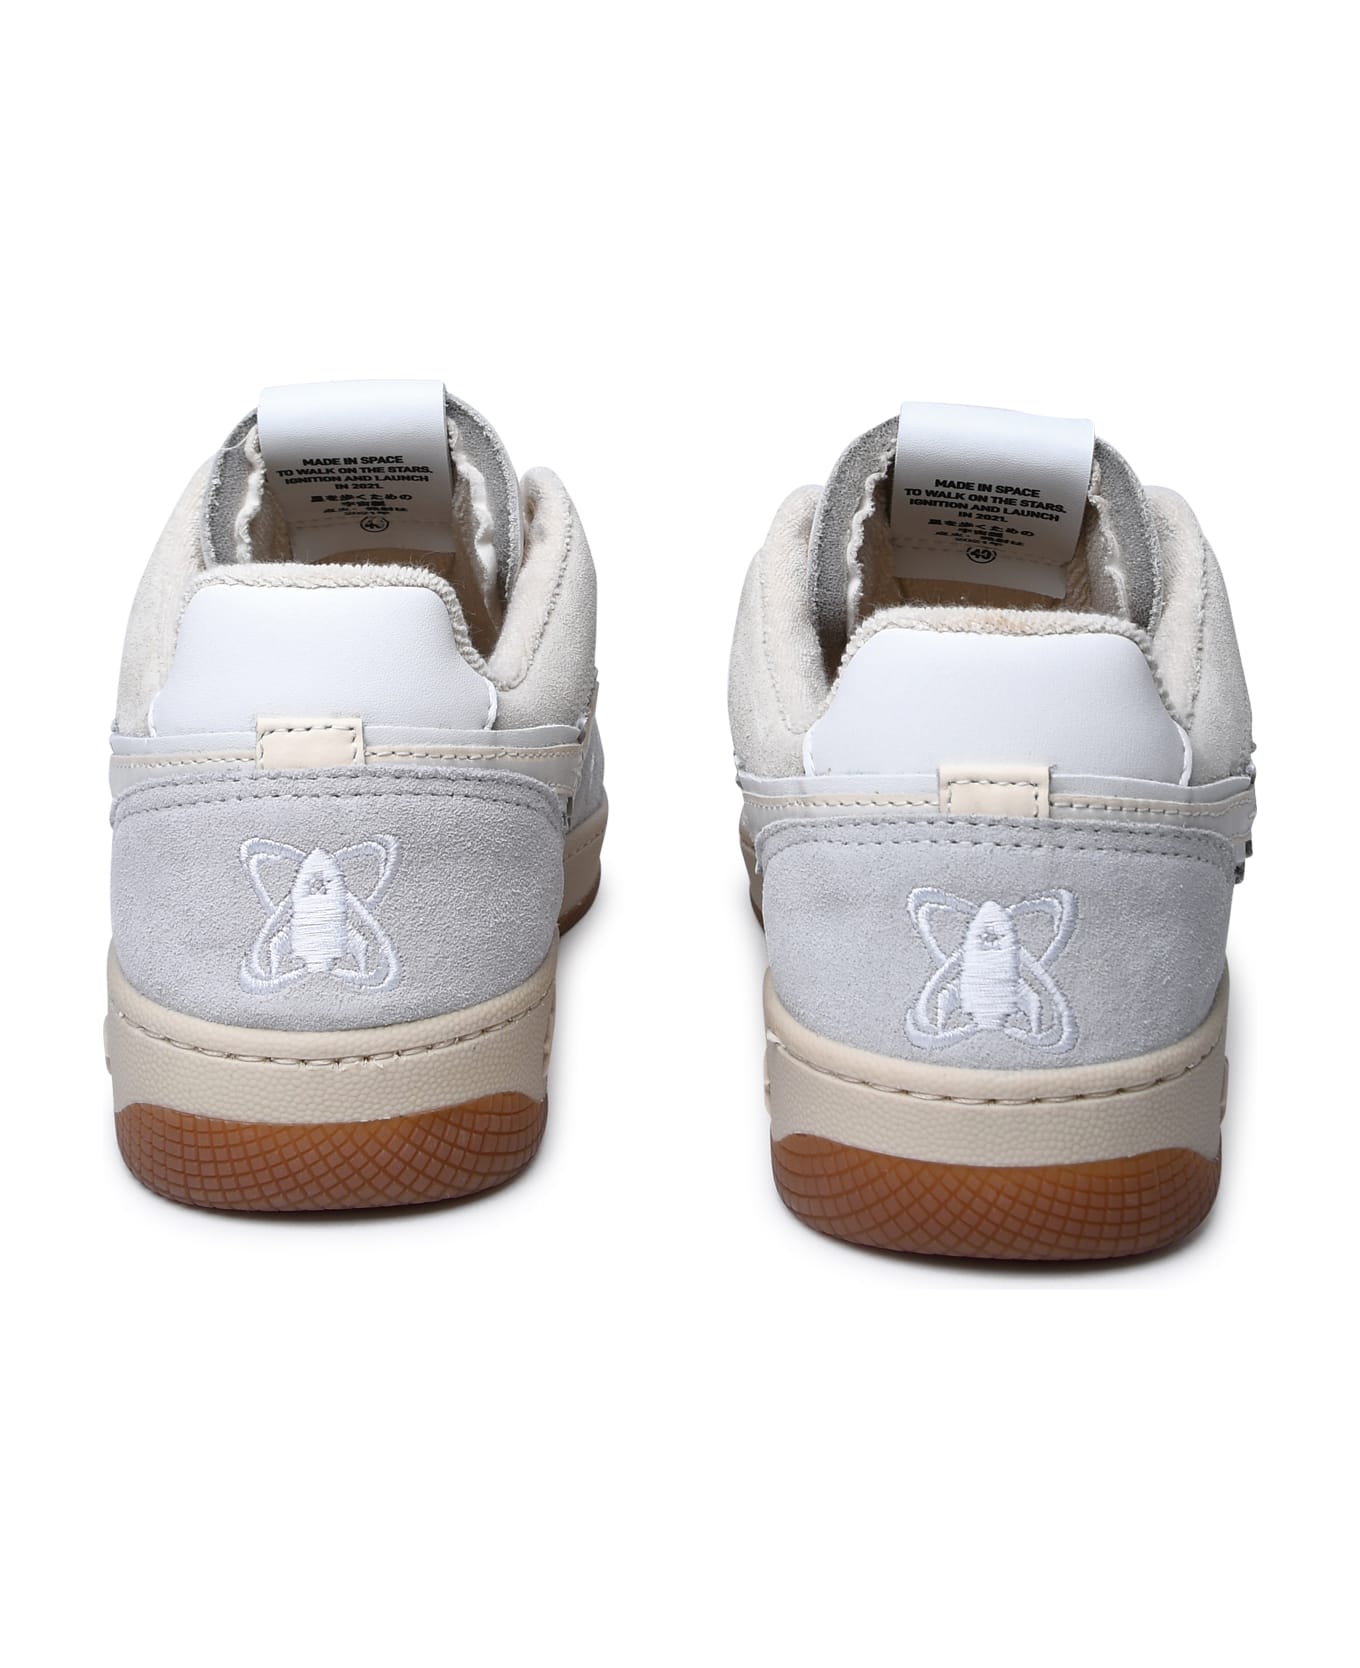 Enterprise Japan White Leather Sneakers - White スニーカー